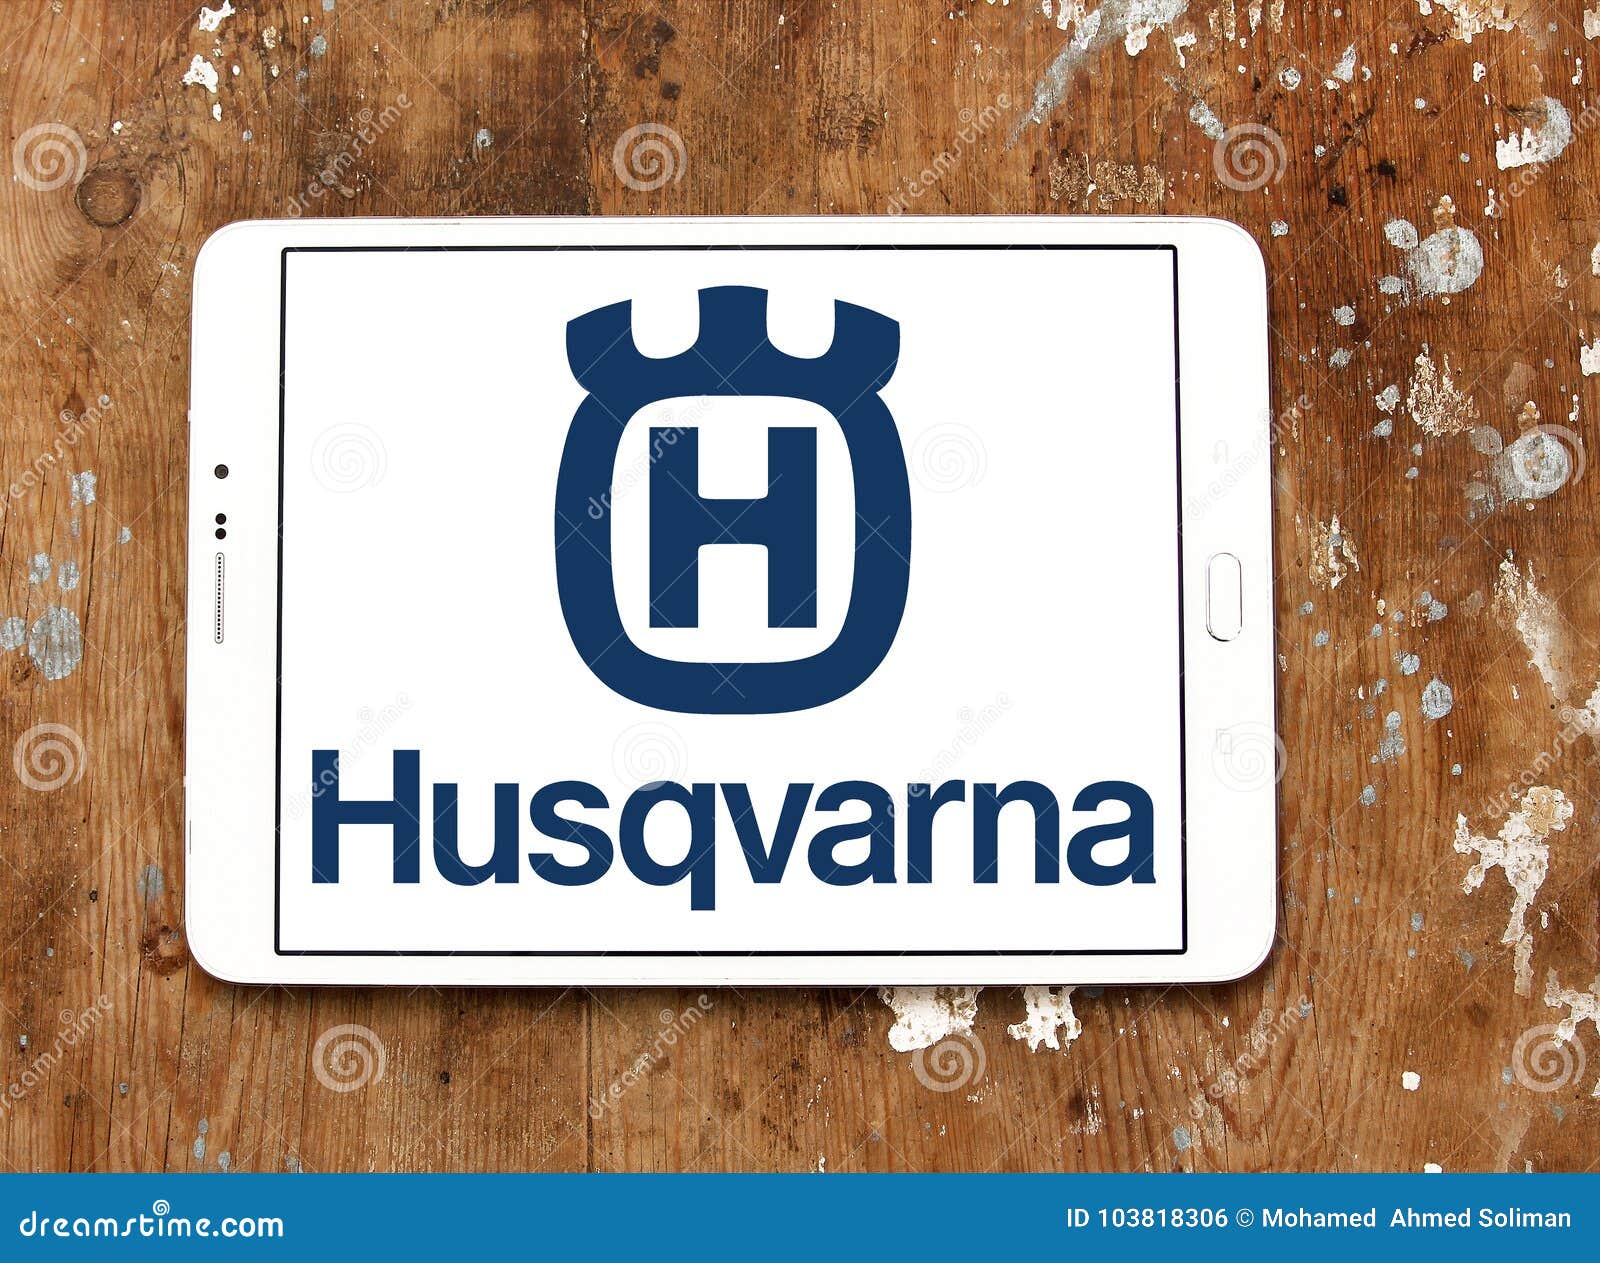 Share 169+ husqvarna logo best